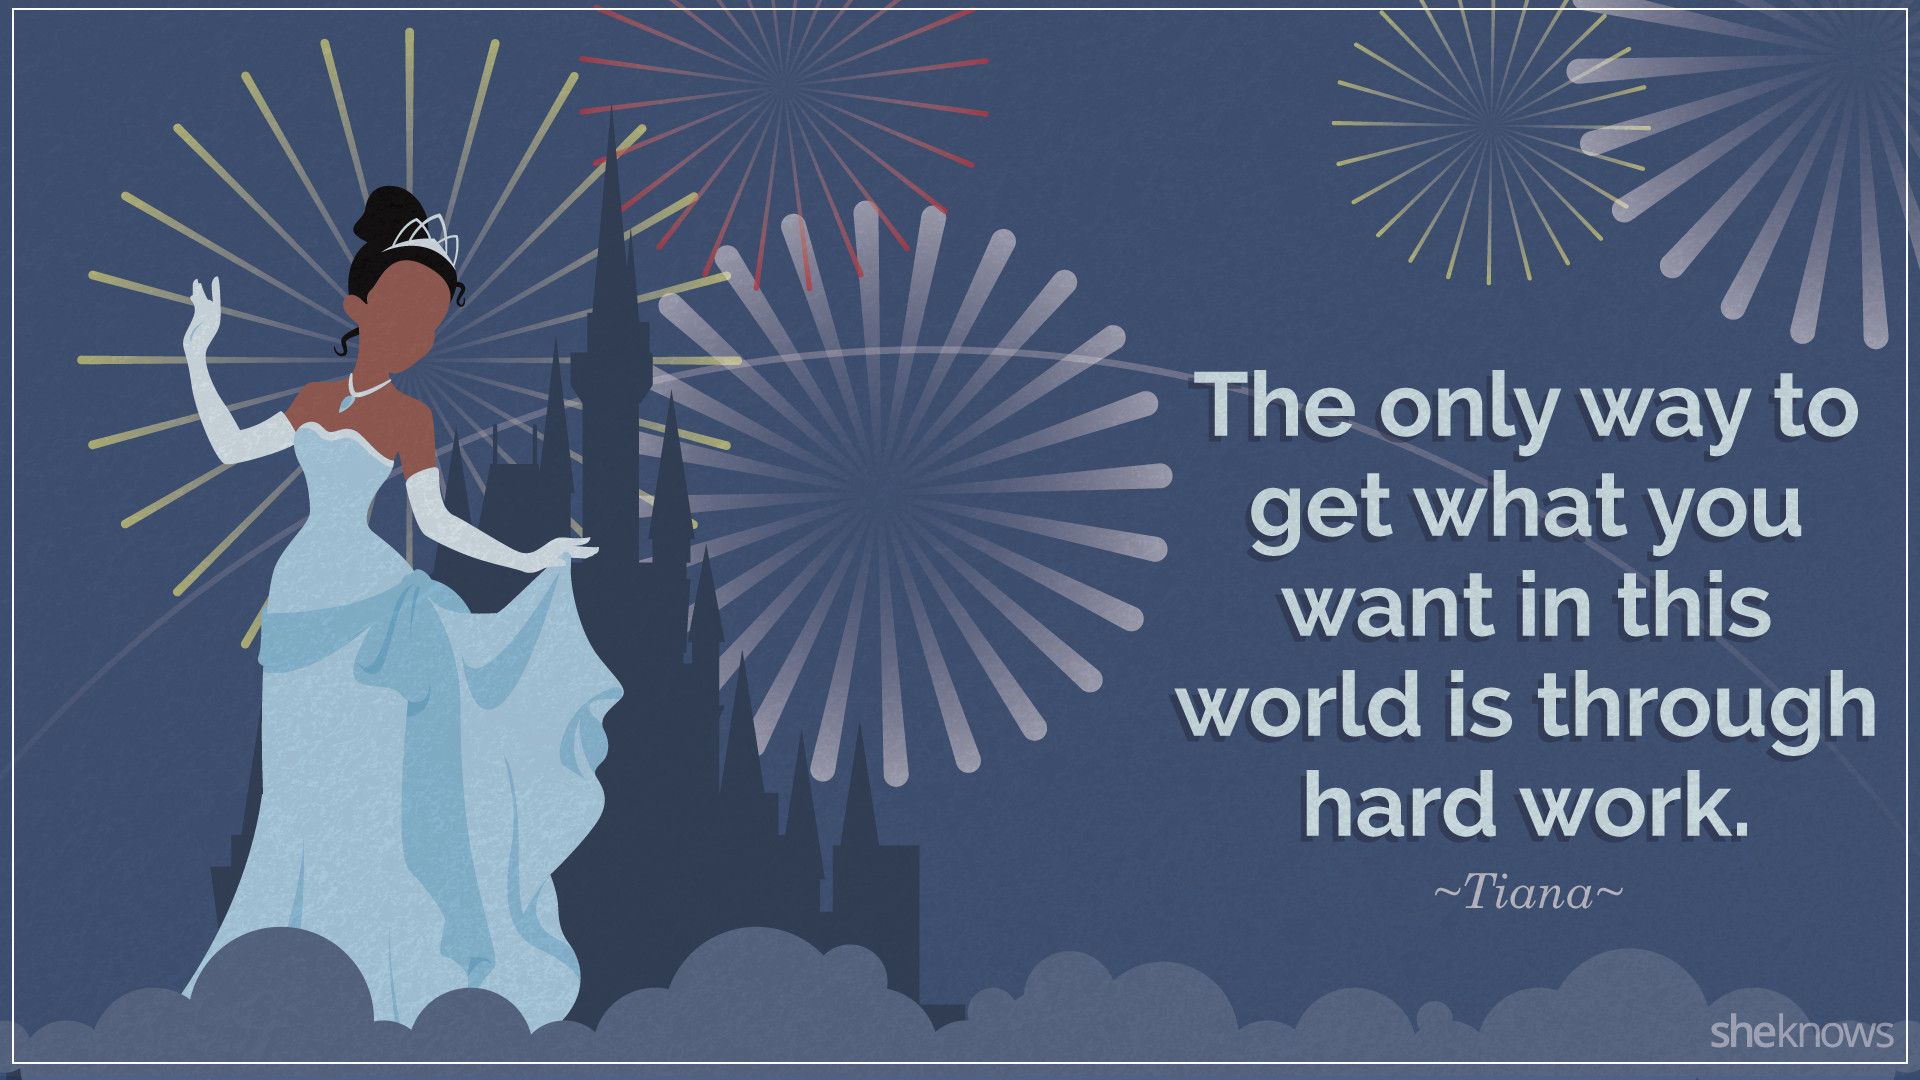 Inspirational Walt Disney Quote Wallpaper